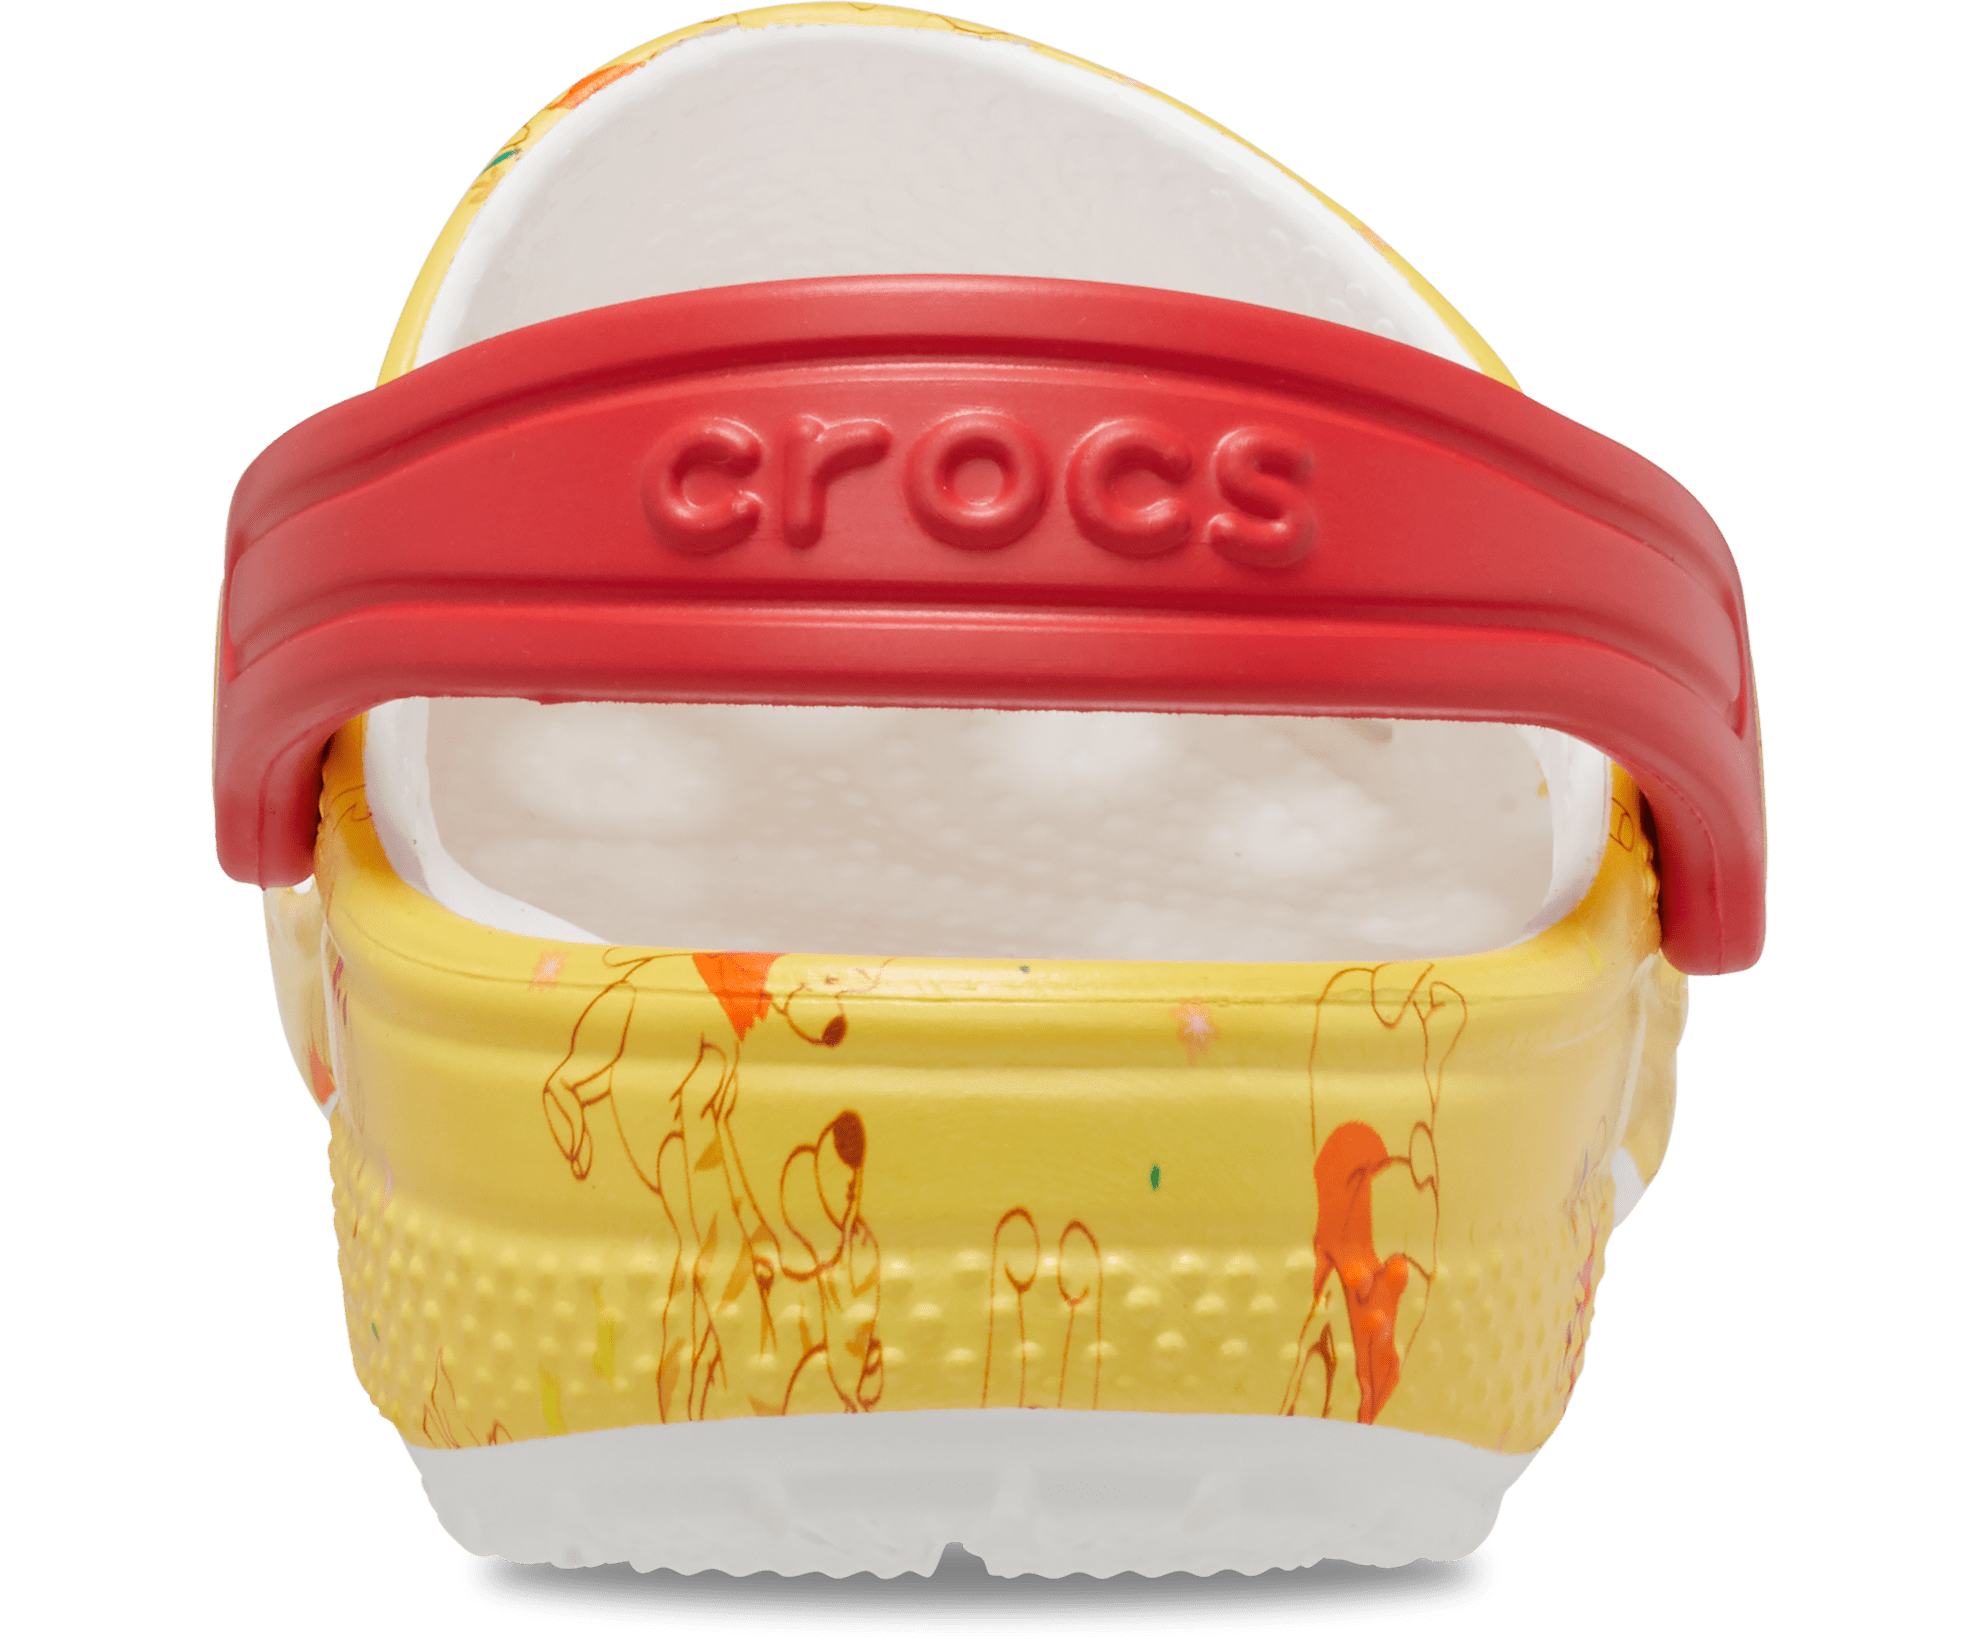 Crocs Kids Classic Disney Winnie the Pooh Clog - The Foot Factory